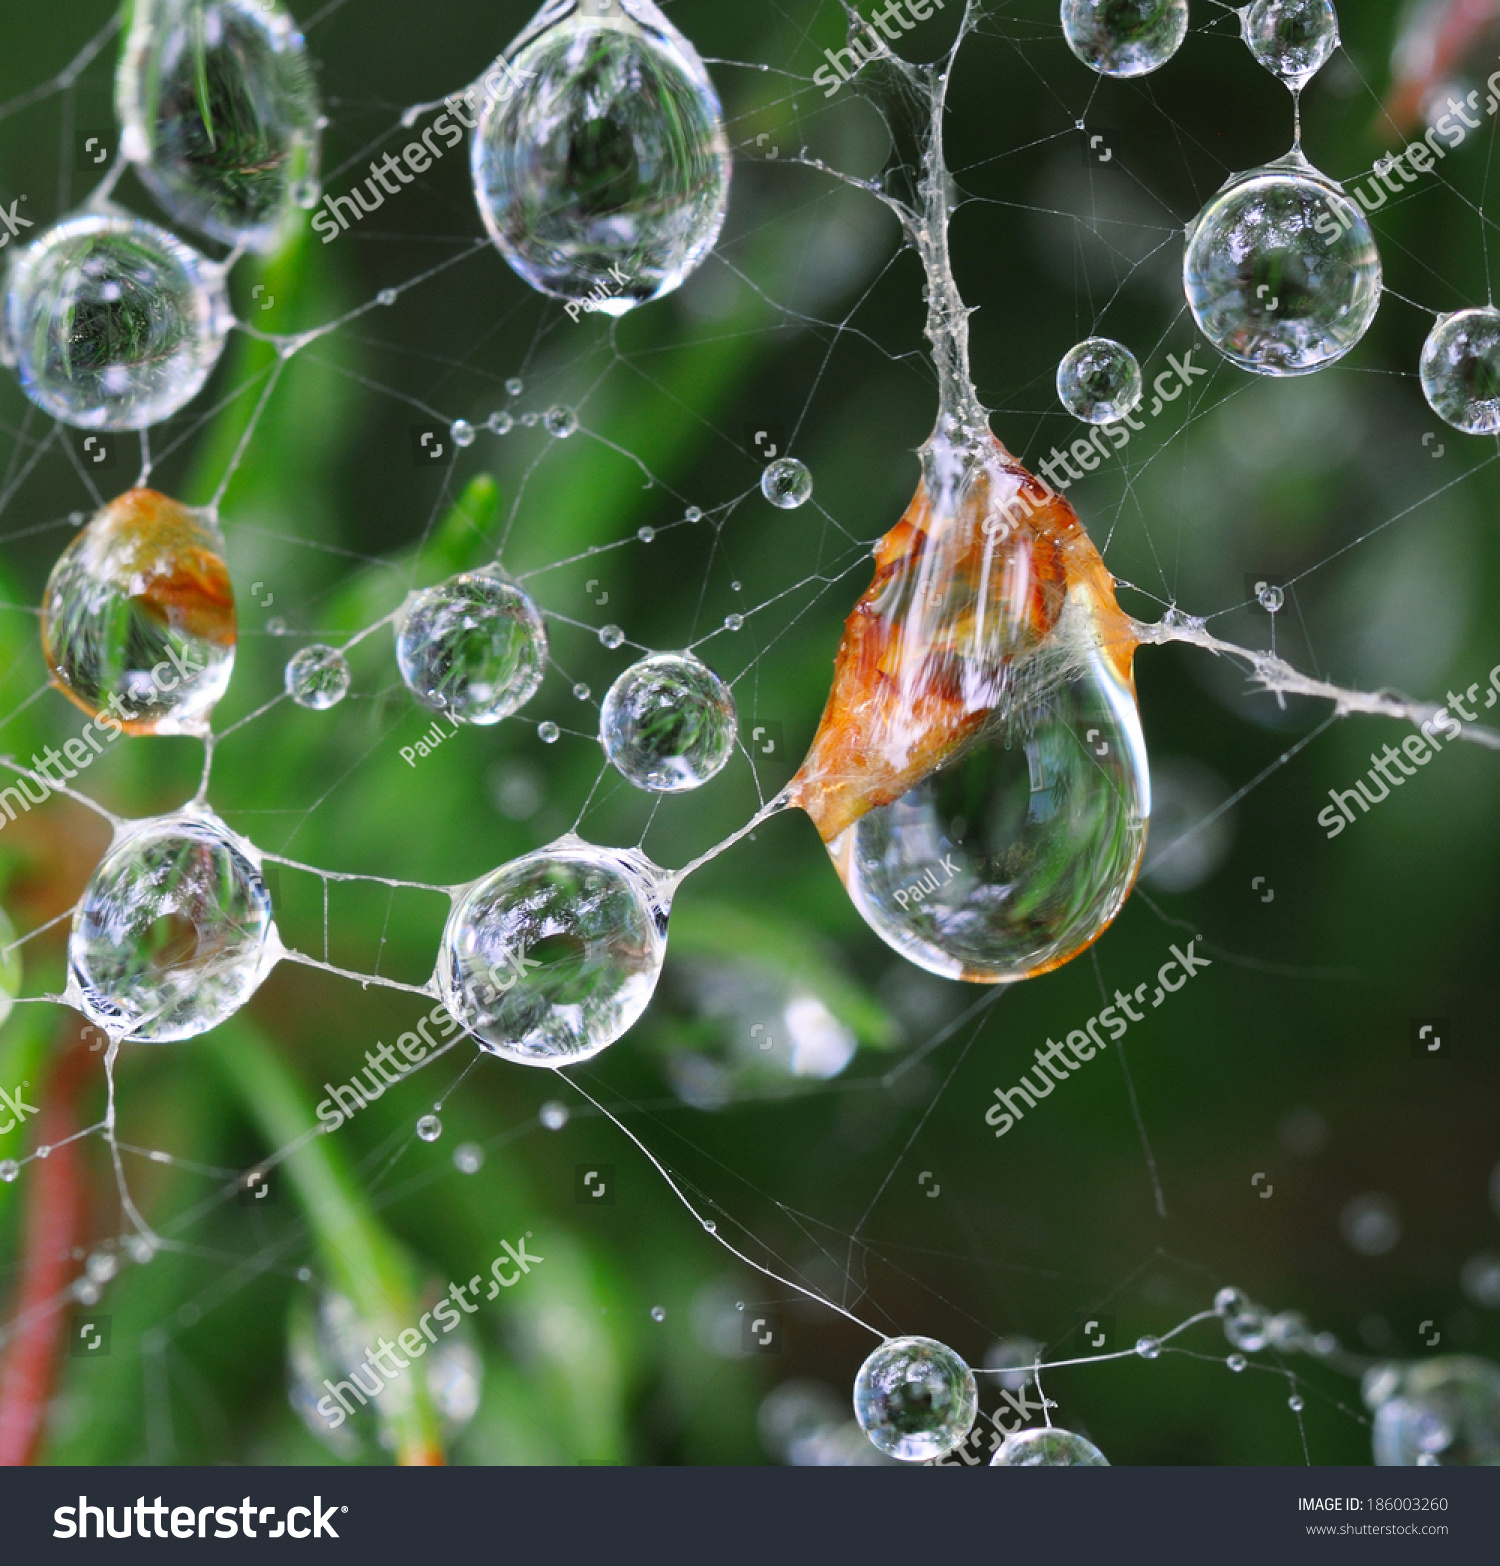 Spider Web Water Drops Stock Photo 186003260 - Shutterstock